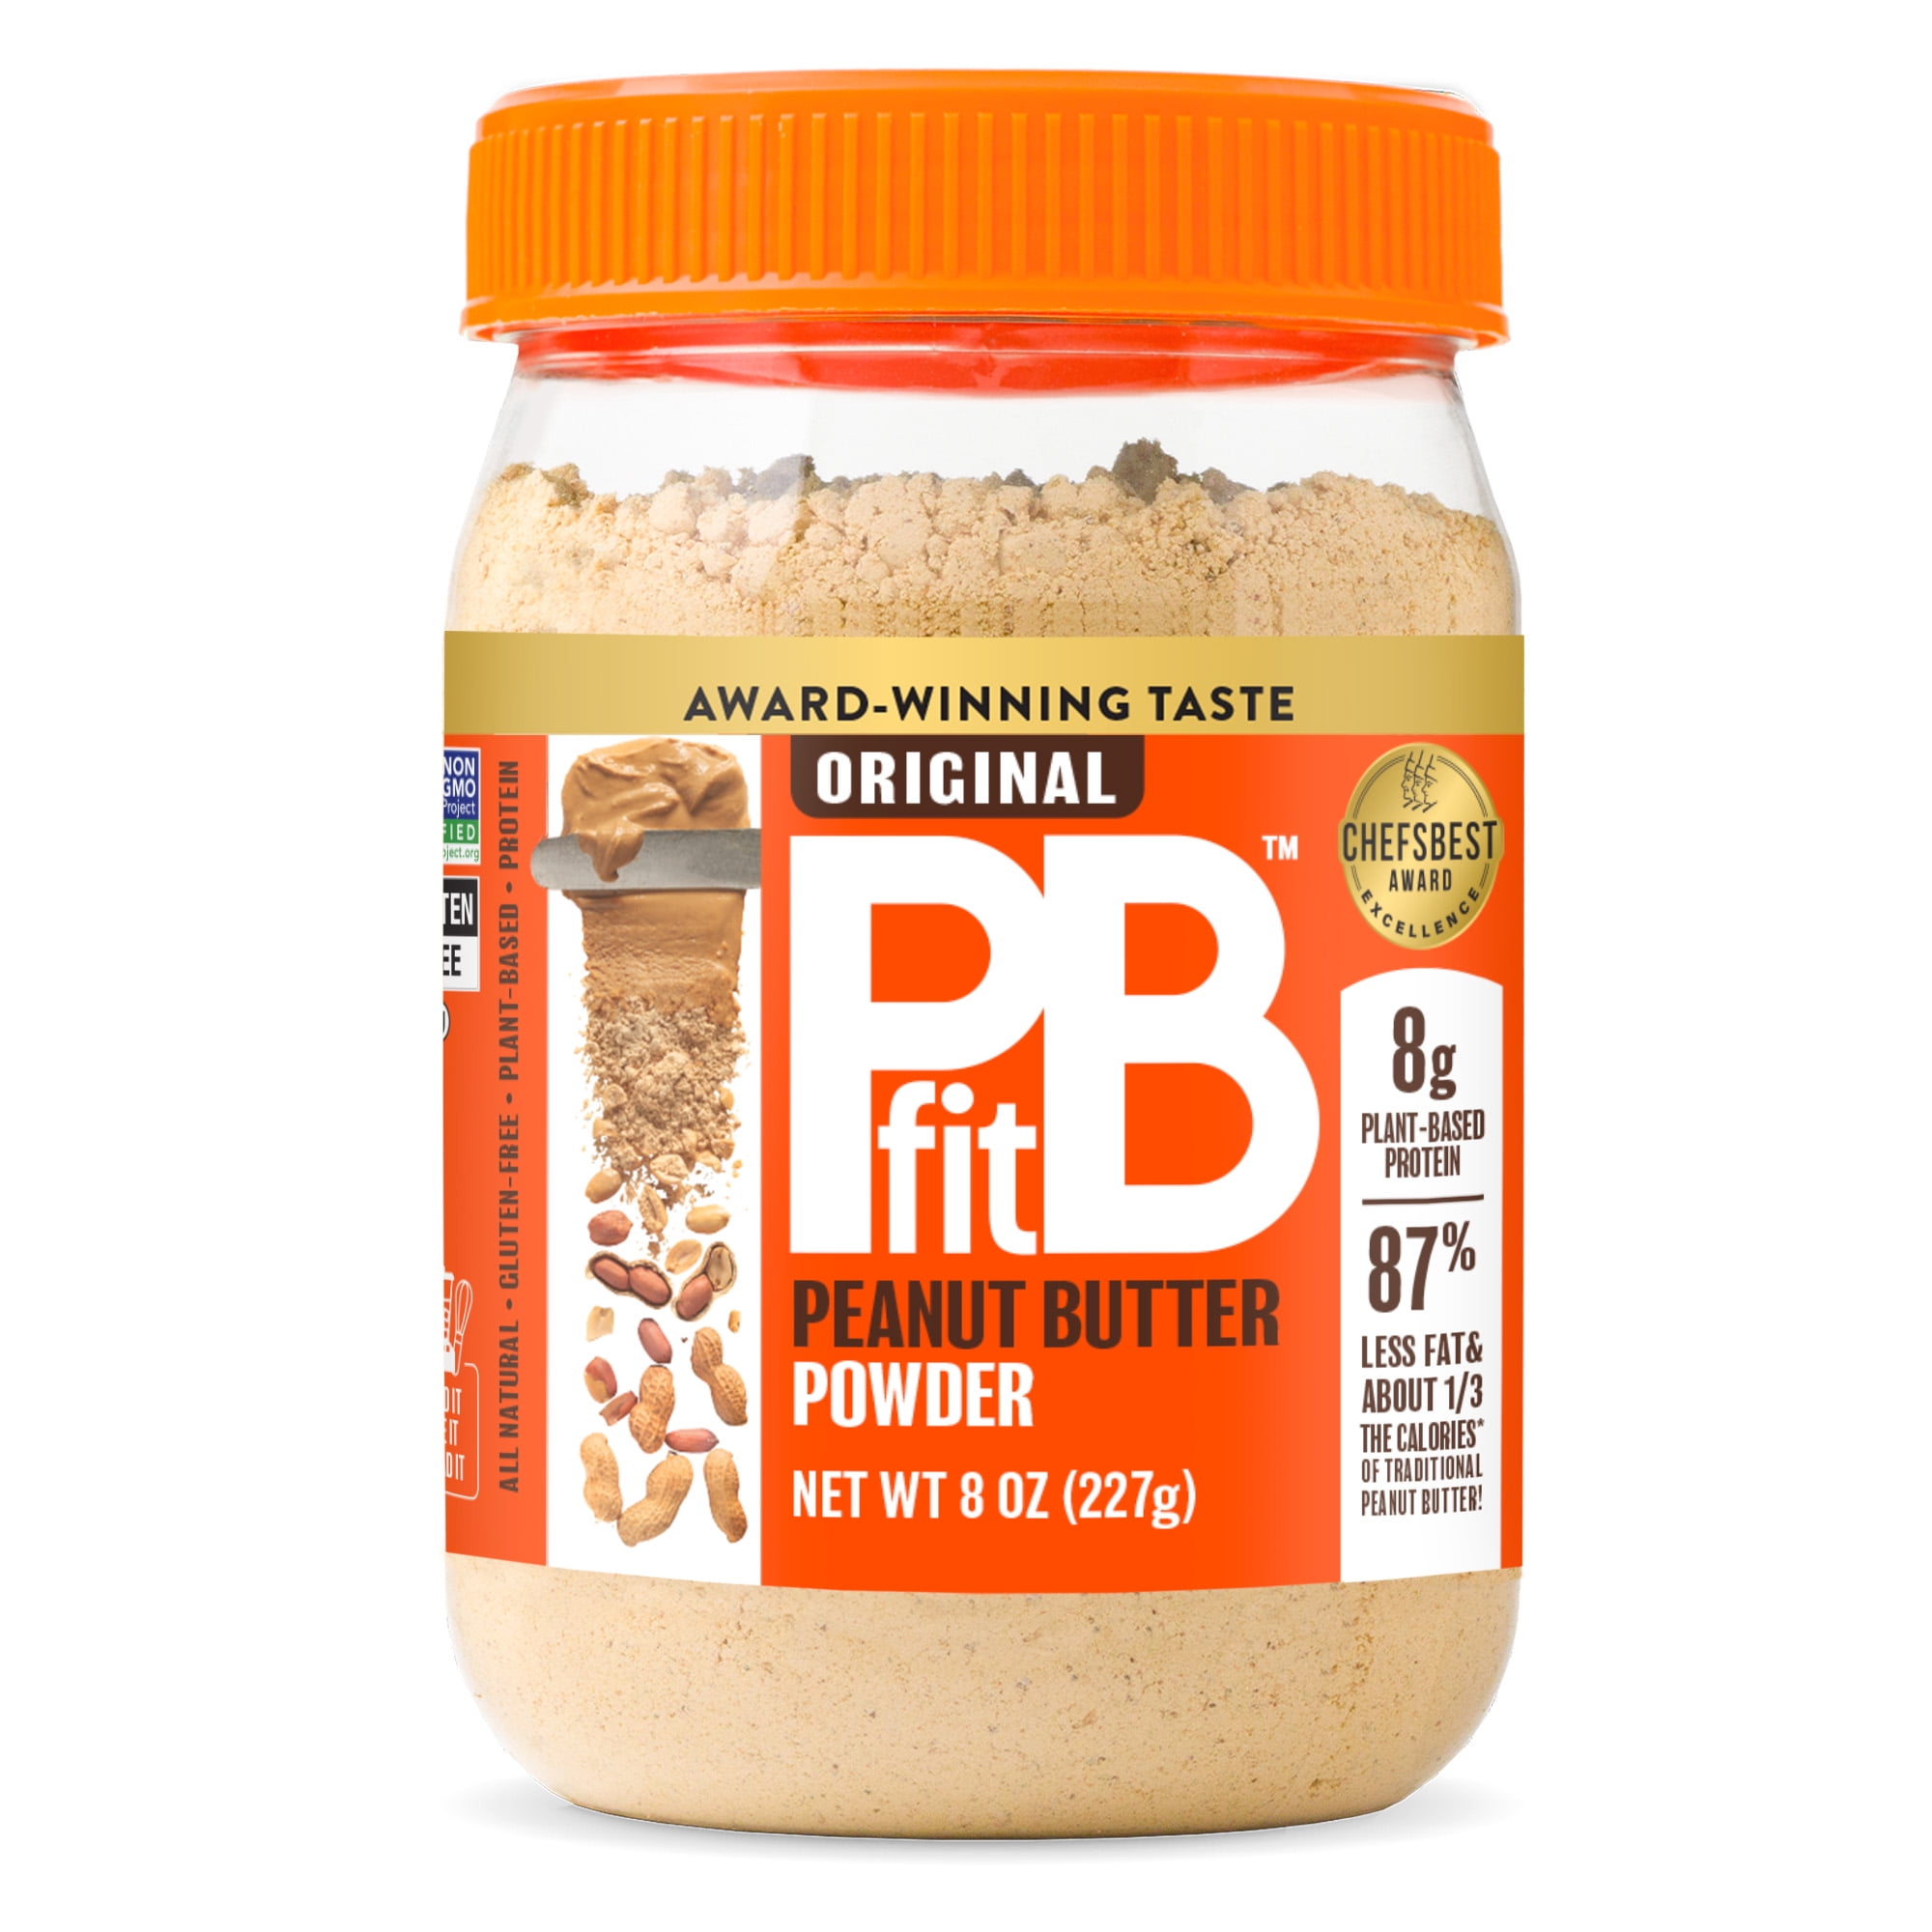 PBfit All-Natural Peanut Butter Powder, 30 oz Jar